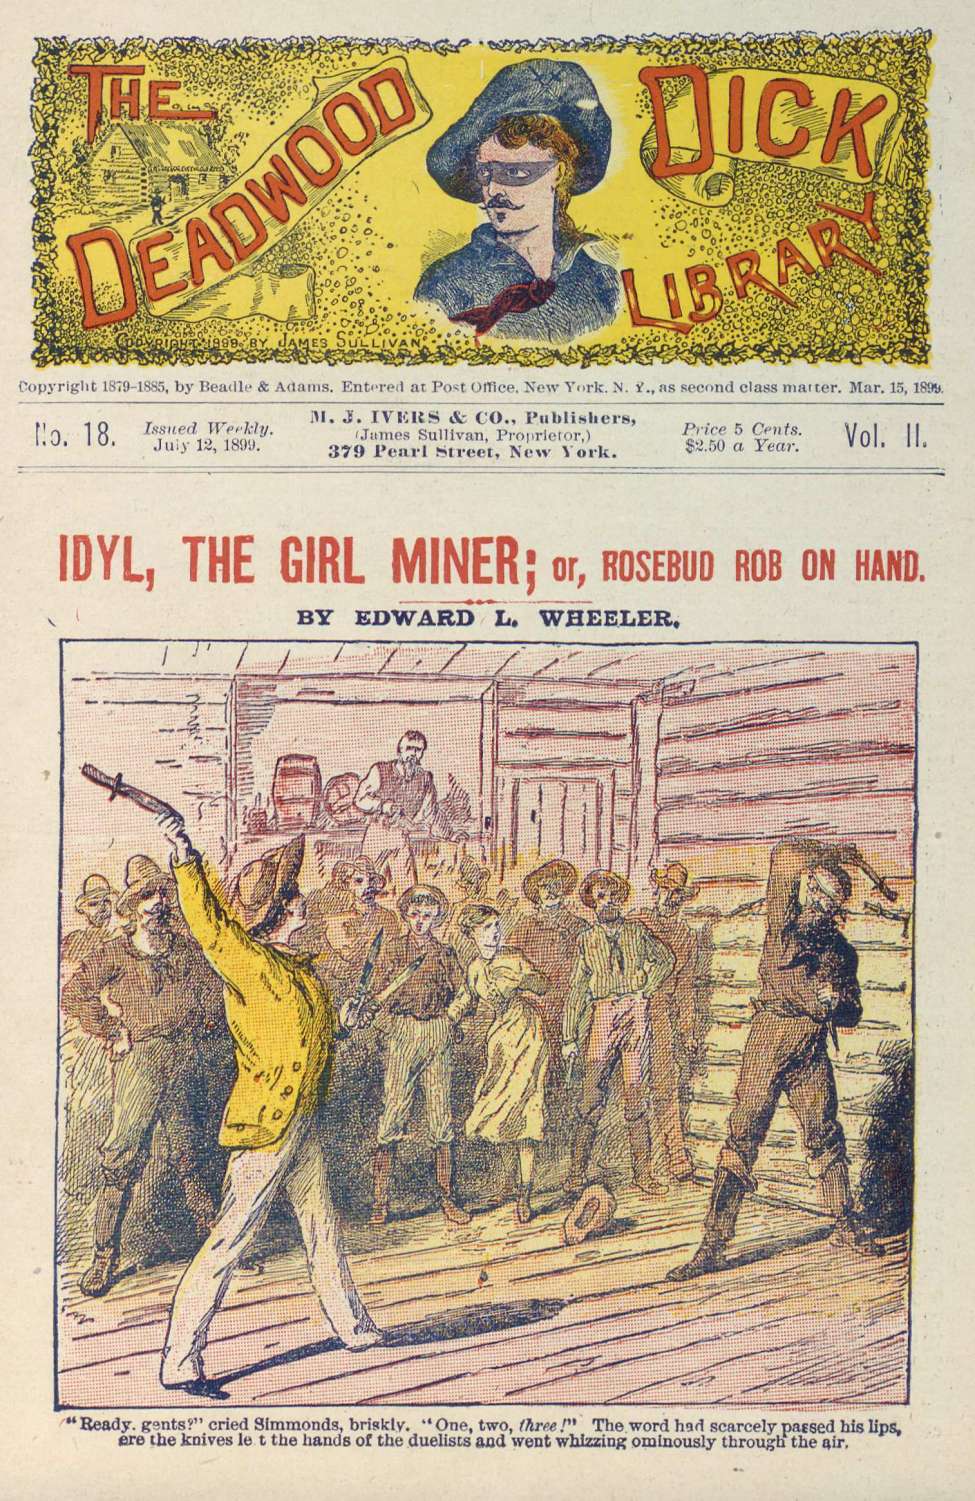 Book Cover For Deadwood Dick Library v2 18 - Idyl, the Girl Miner